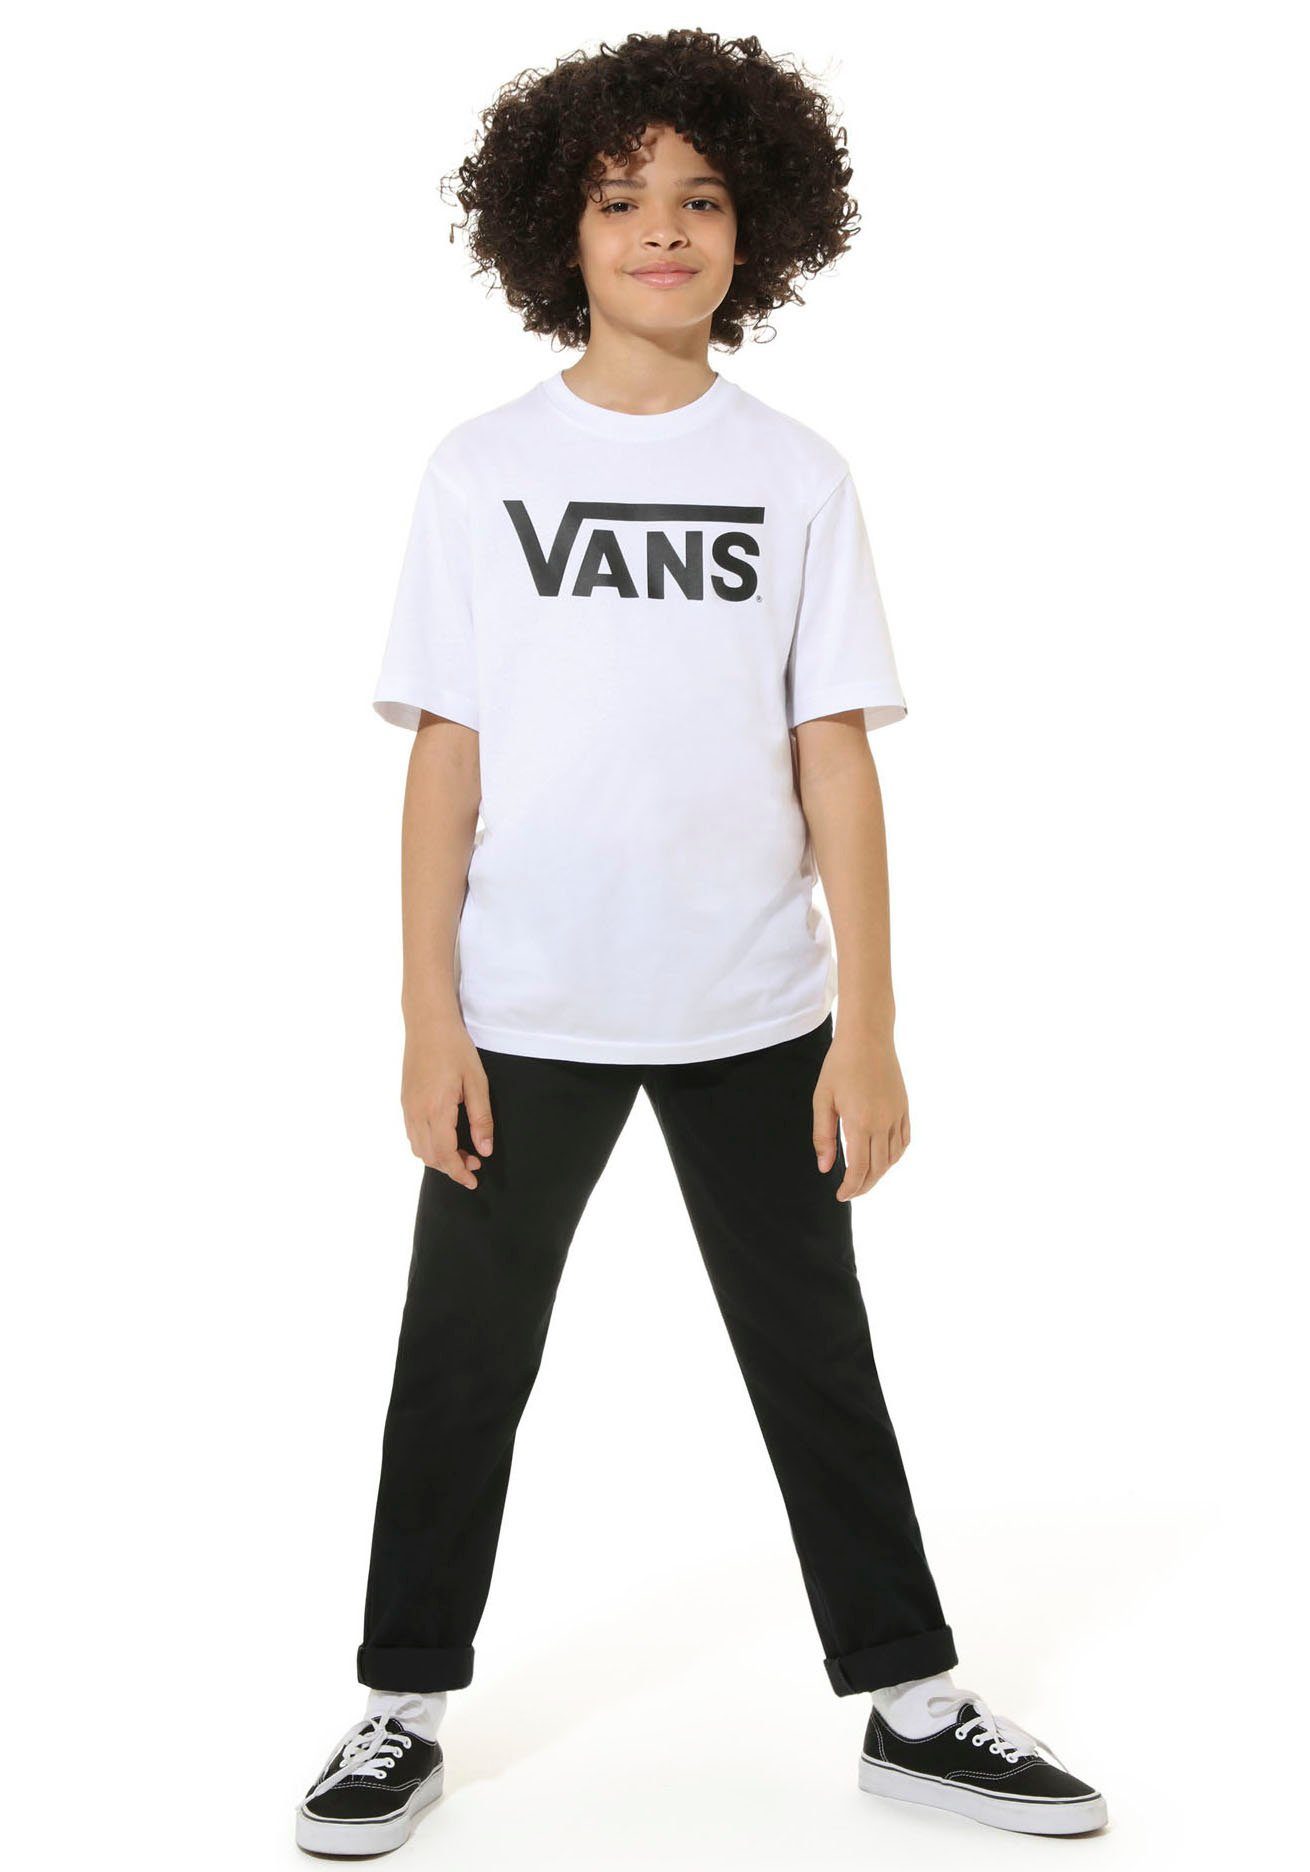 VANS T-Shirt CLASSIC weiß BOYS Vans